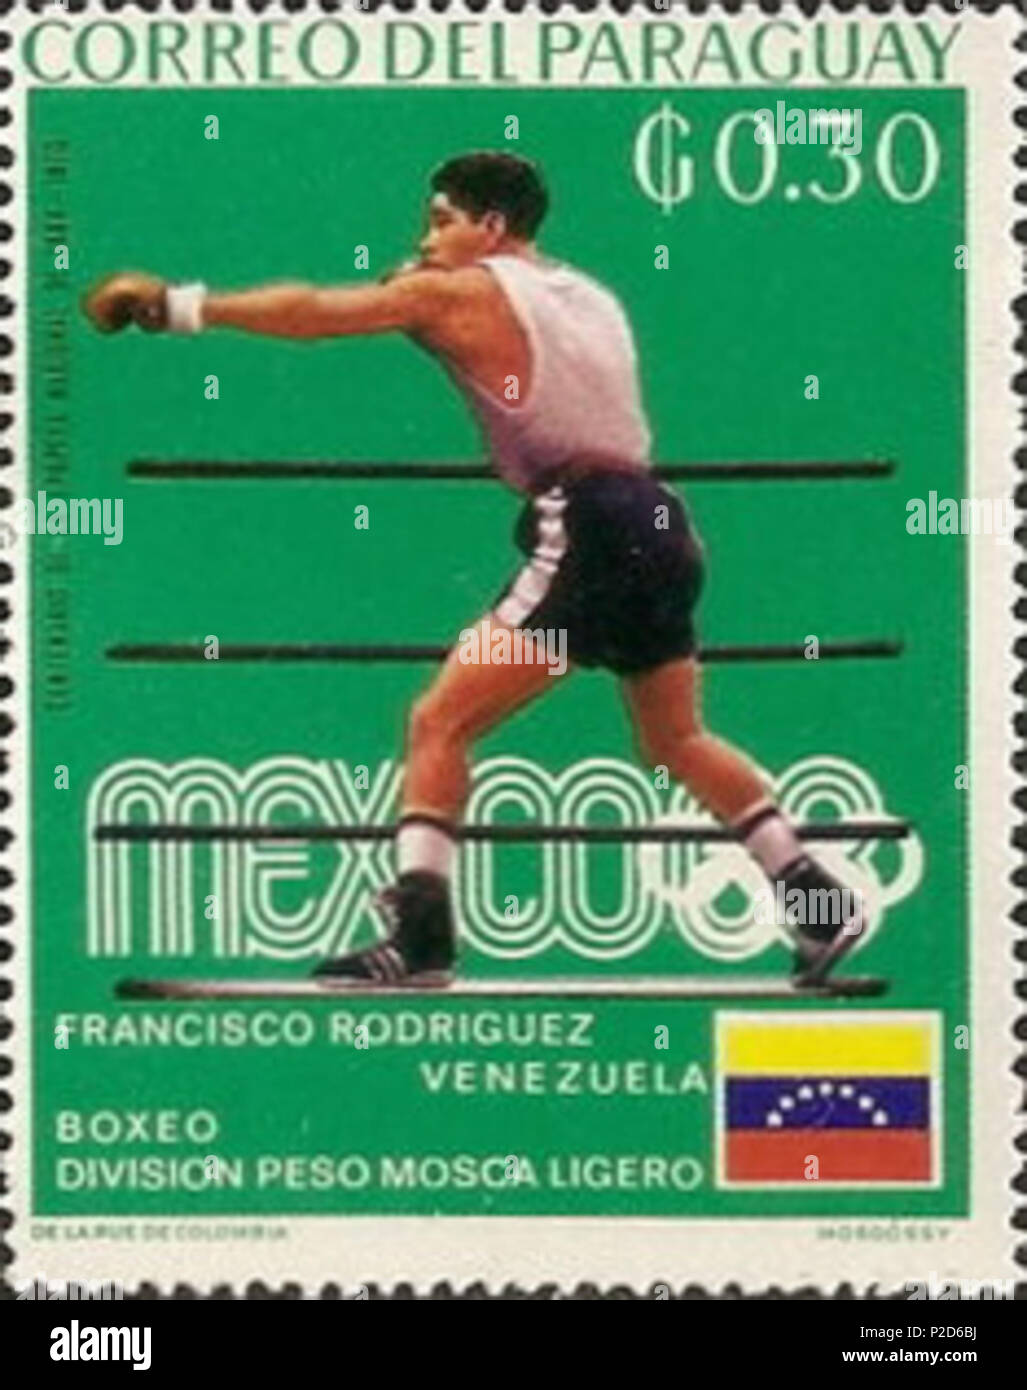 20 Francisco Rodríguez boxer 1969 Paraguay stamp Stock Photo - Alamy